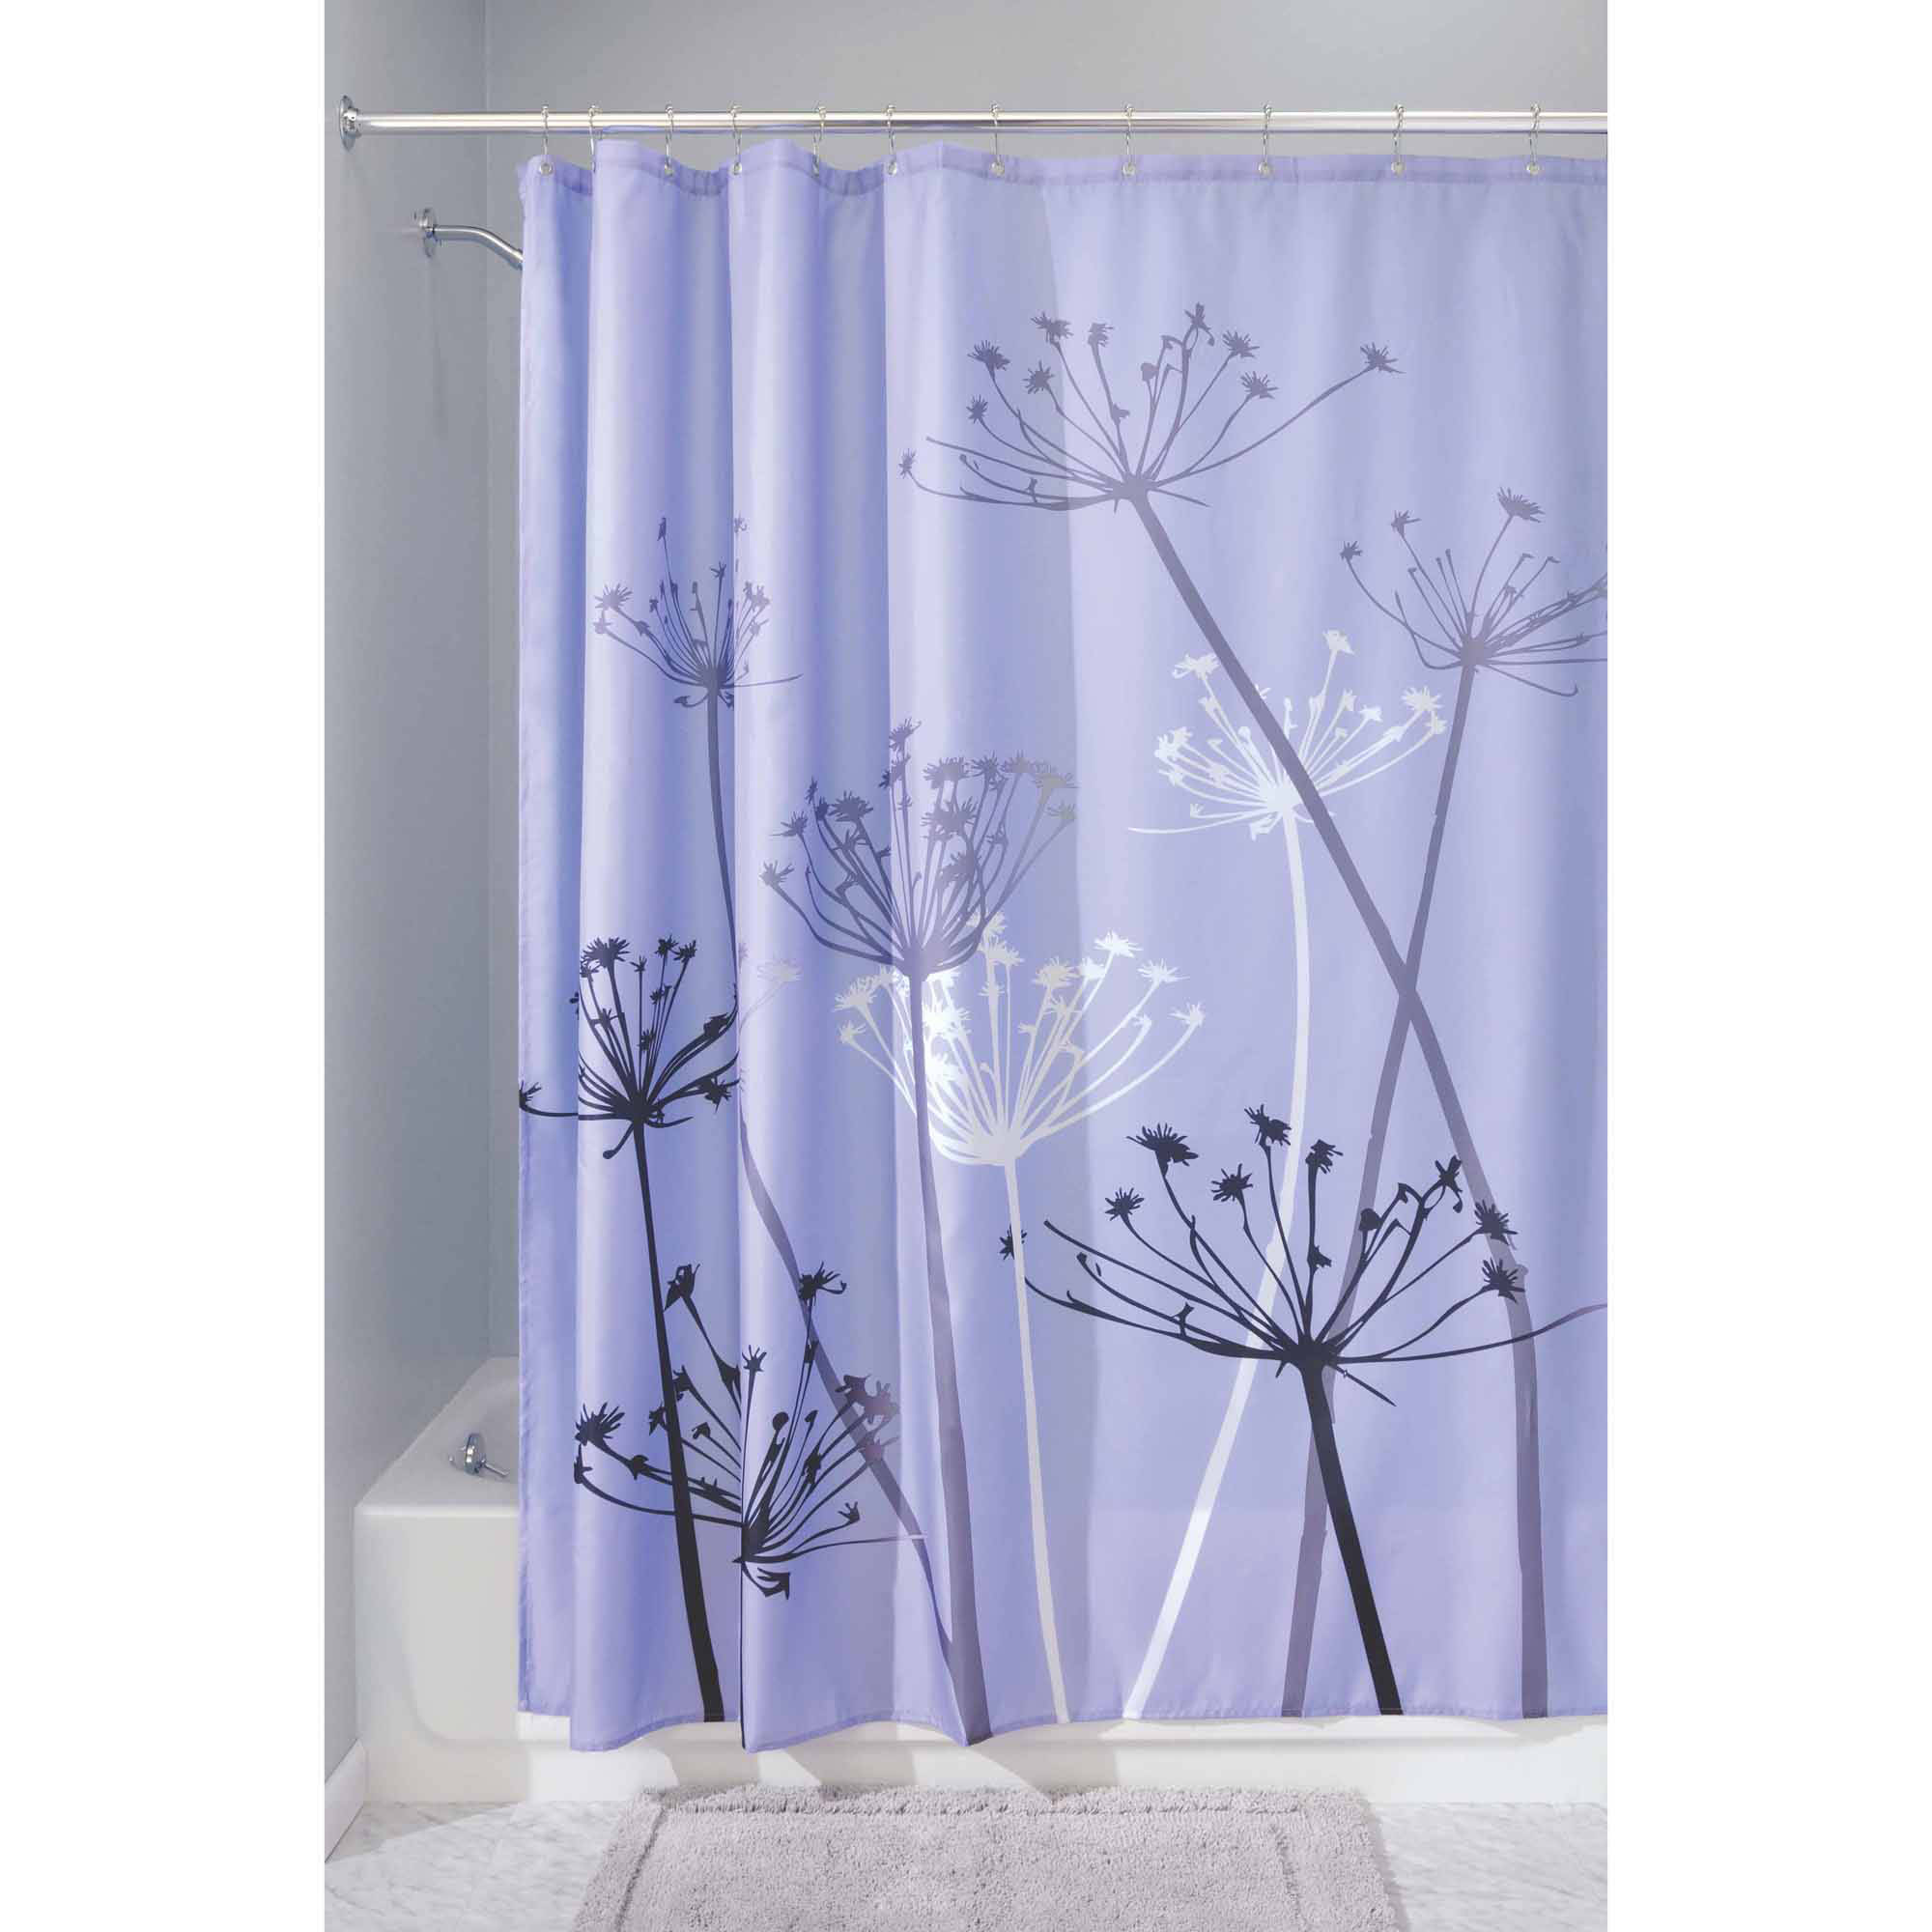 InterDesign Thistle Fabric Shower Curtain, Standard 72" x 72", Purple/Gray - image 3 of 3